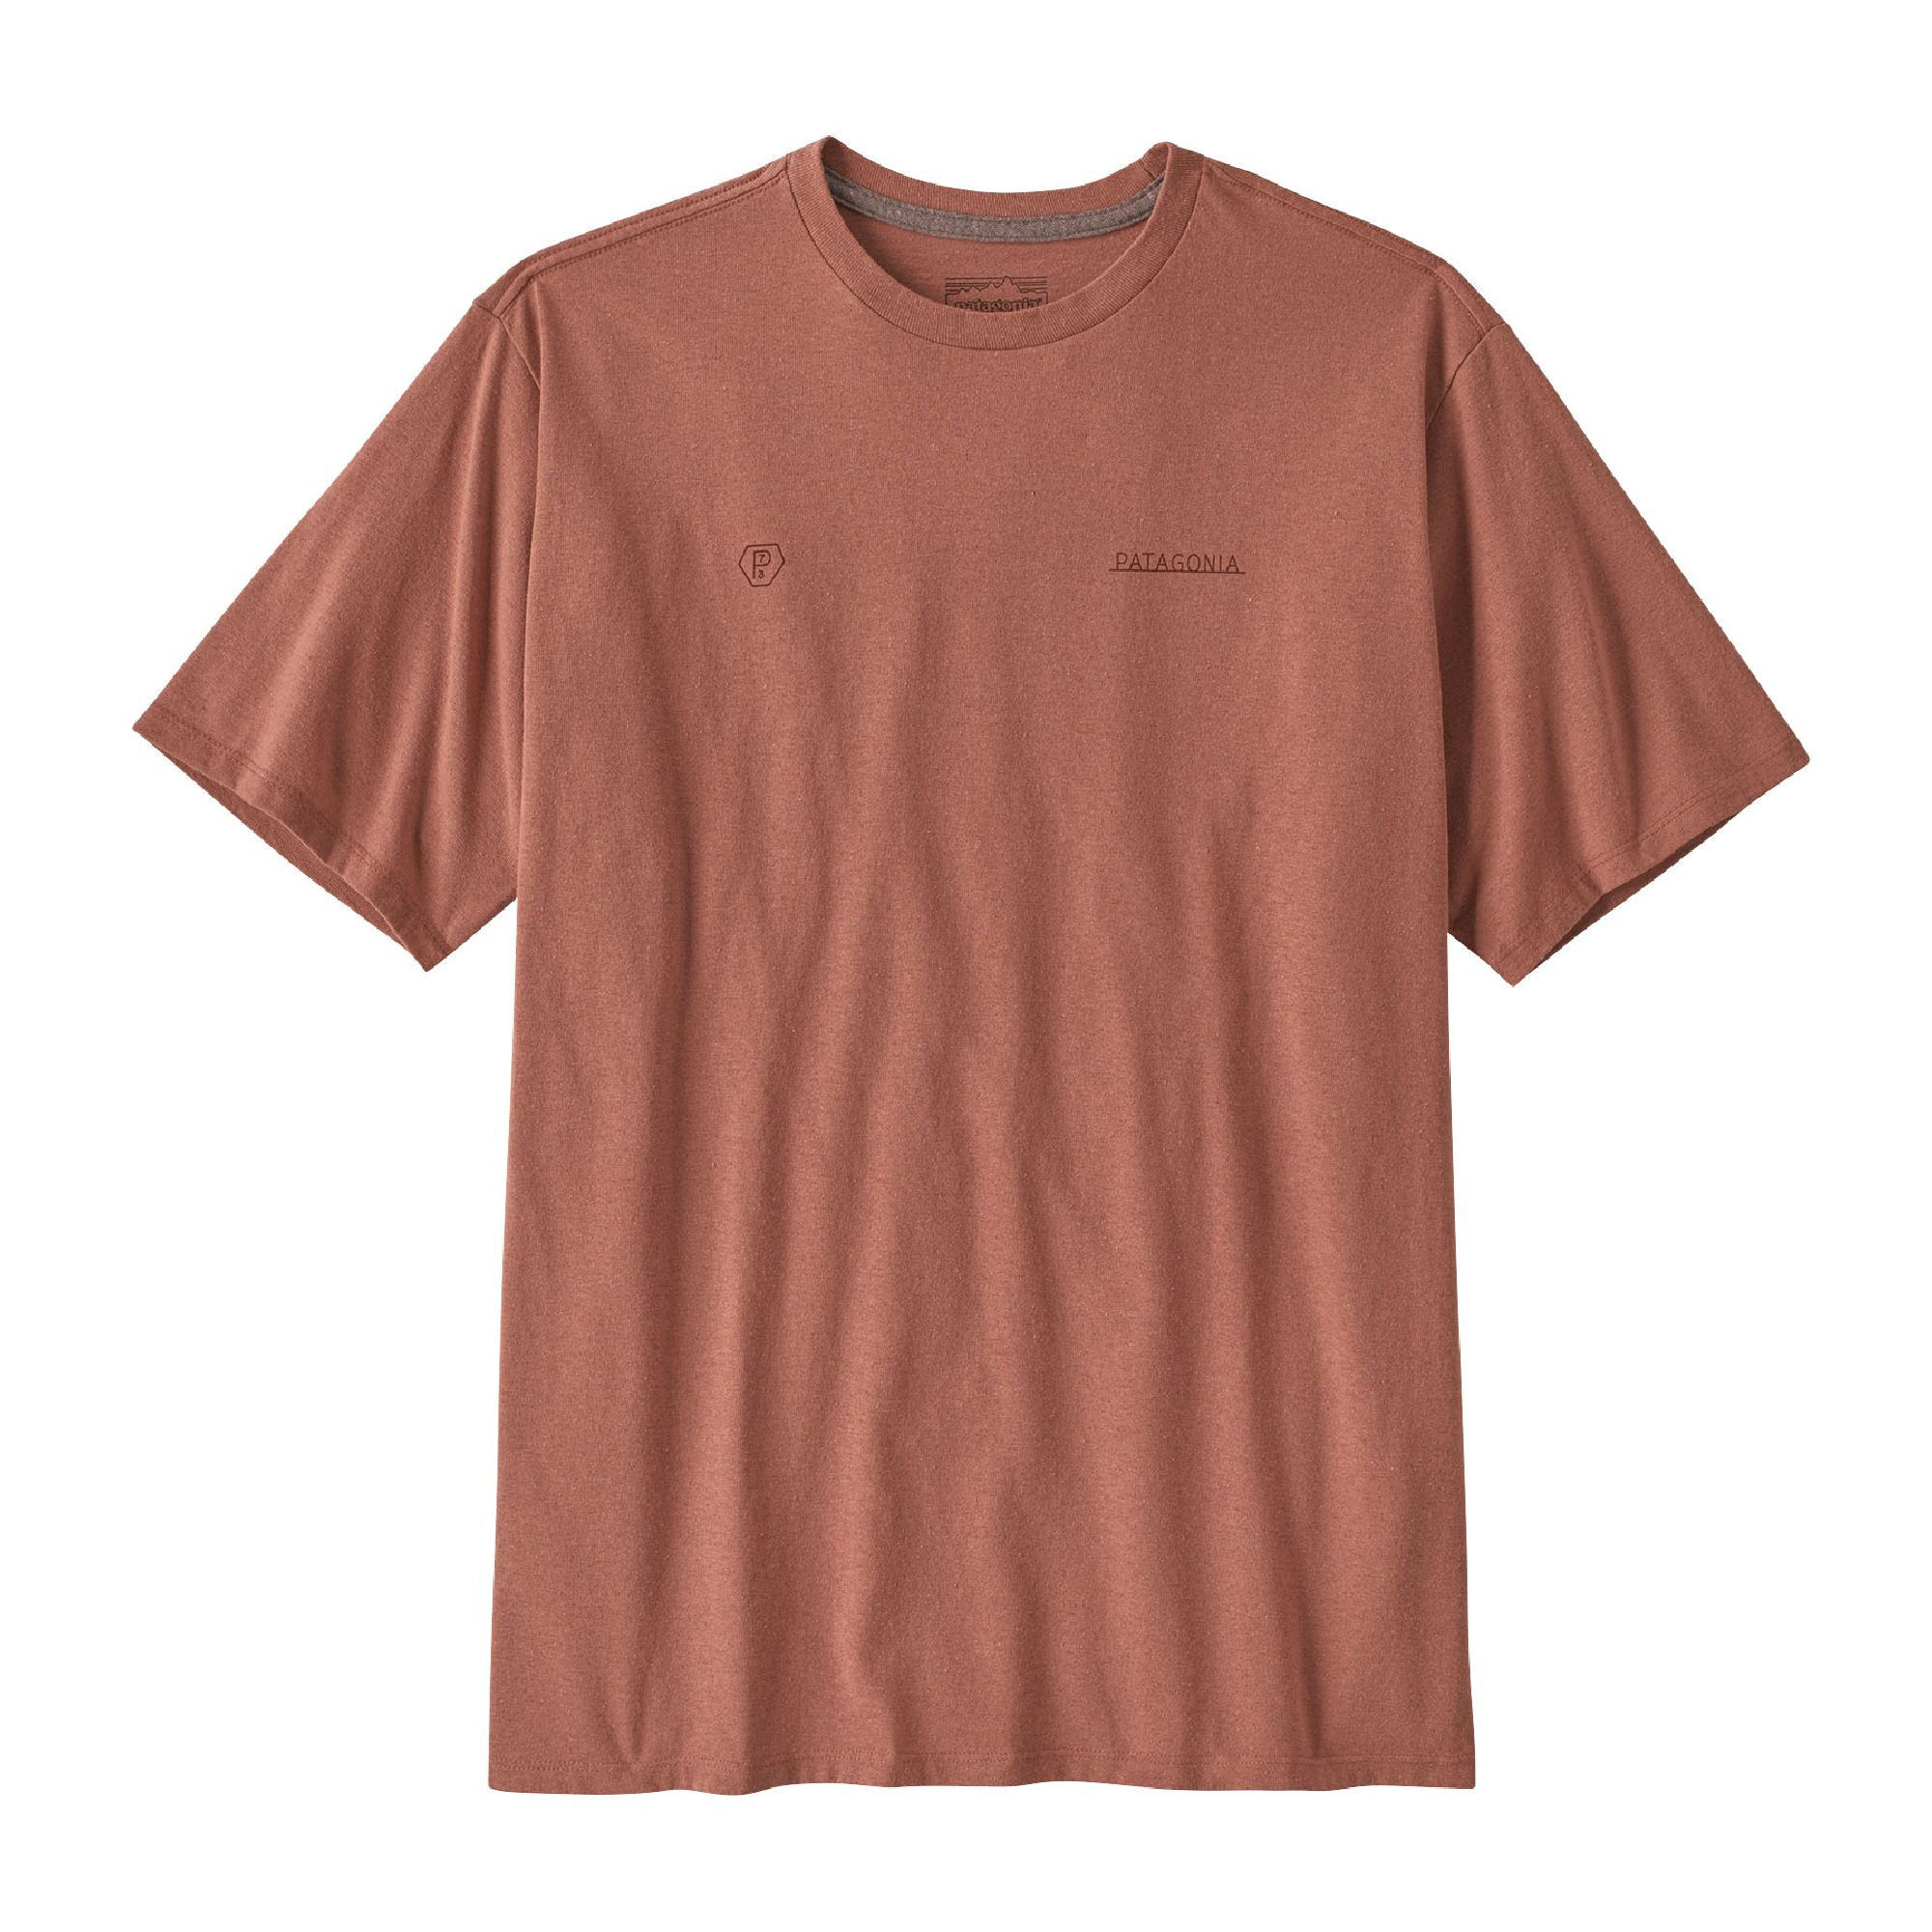 Patagonia M's Forge Mark Responsibili-Tee - T-shirt homme | Hardloop